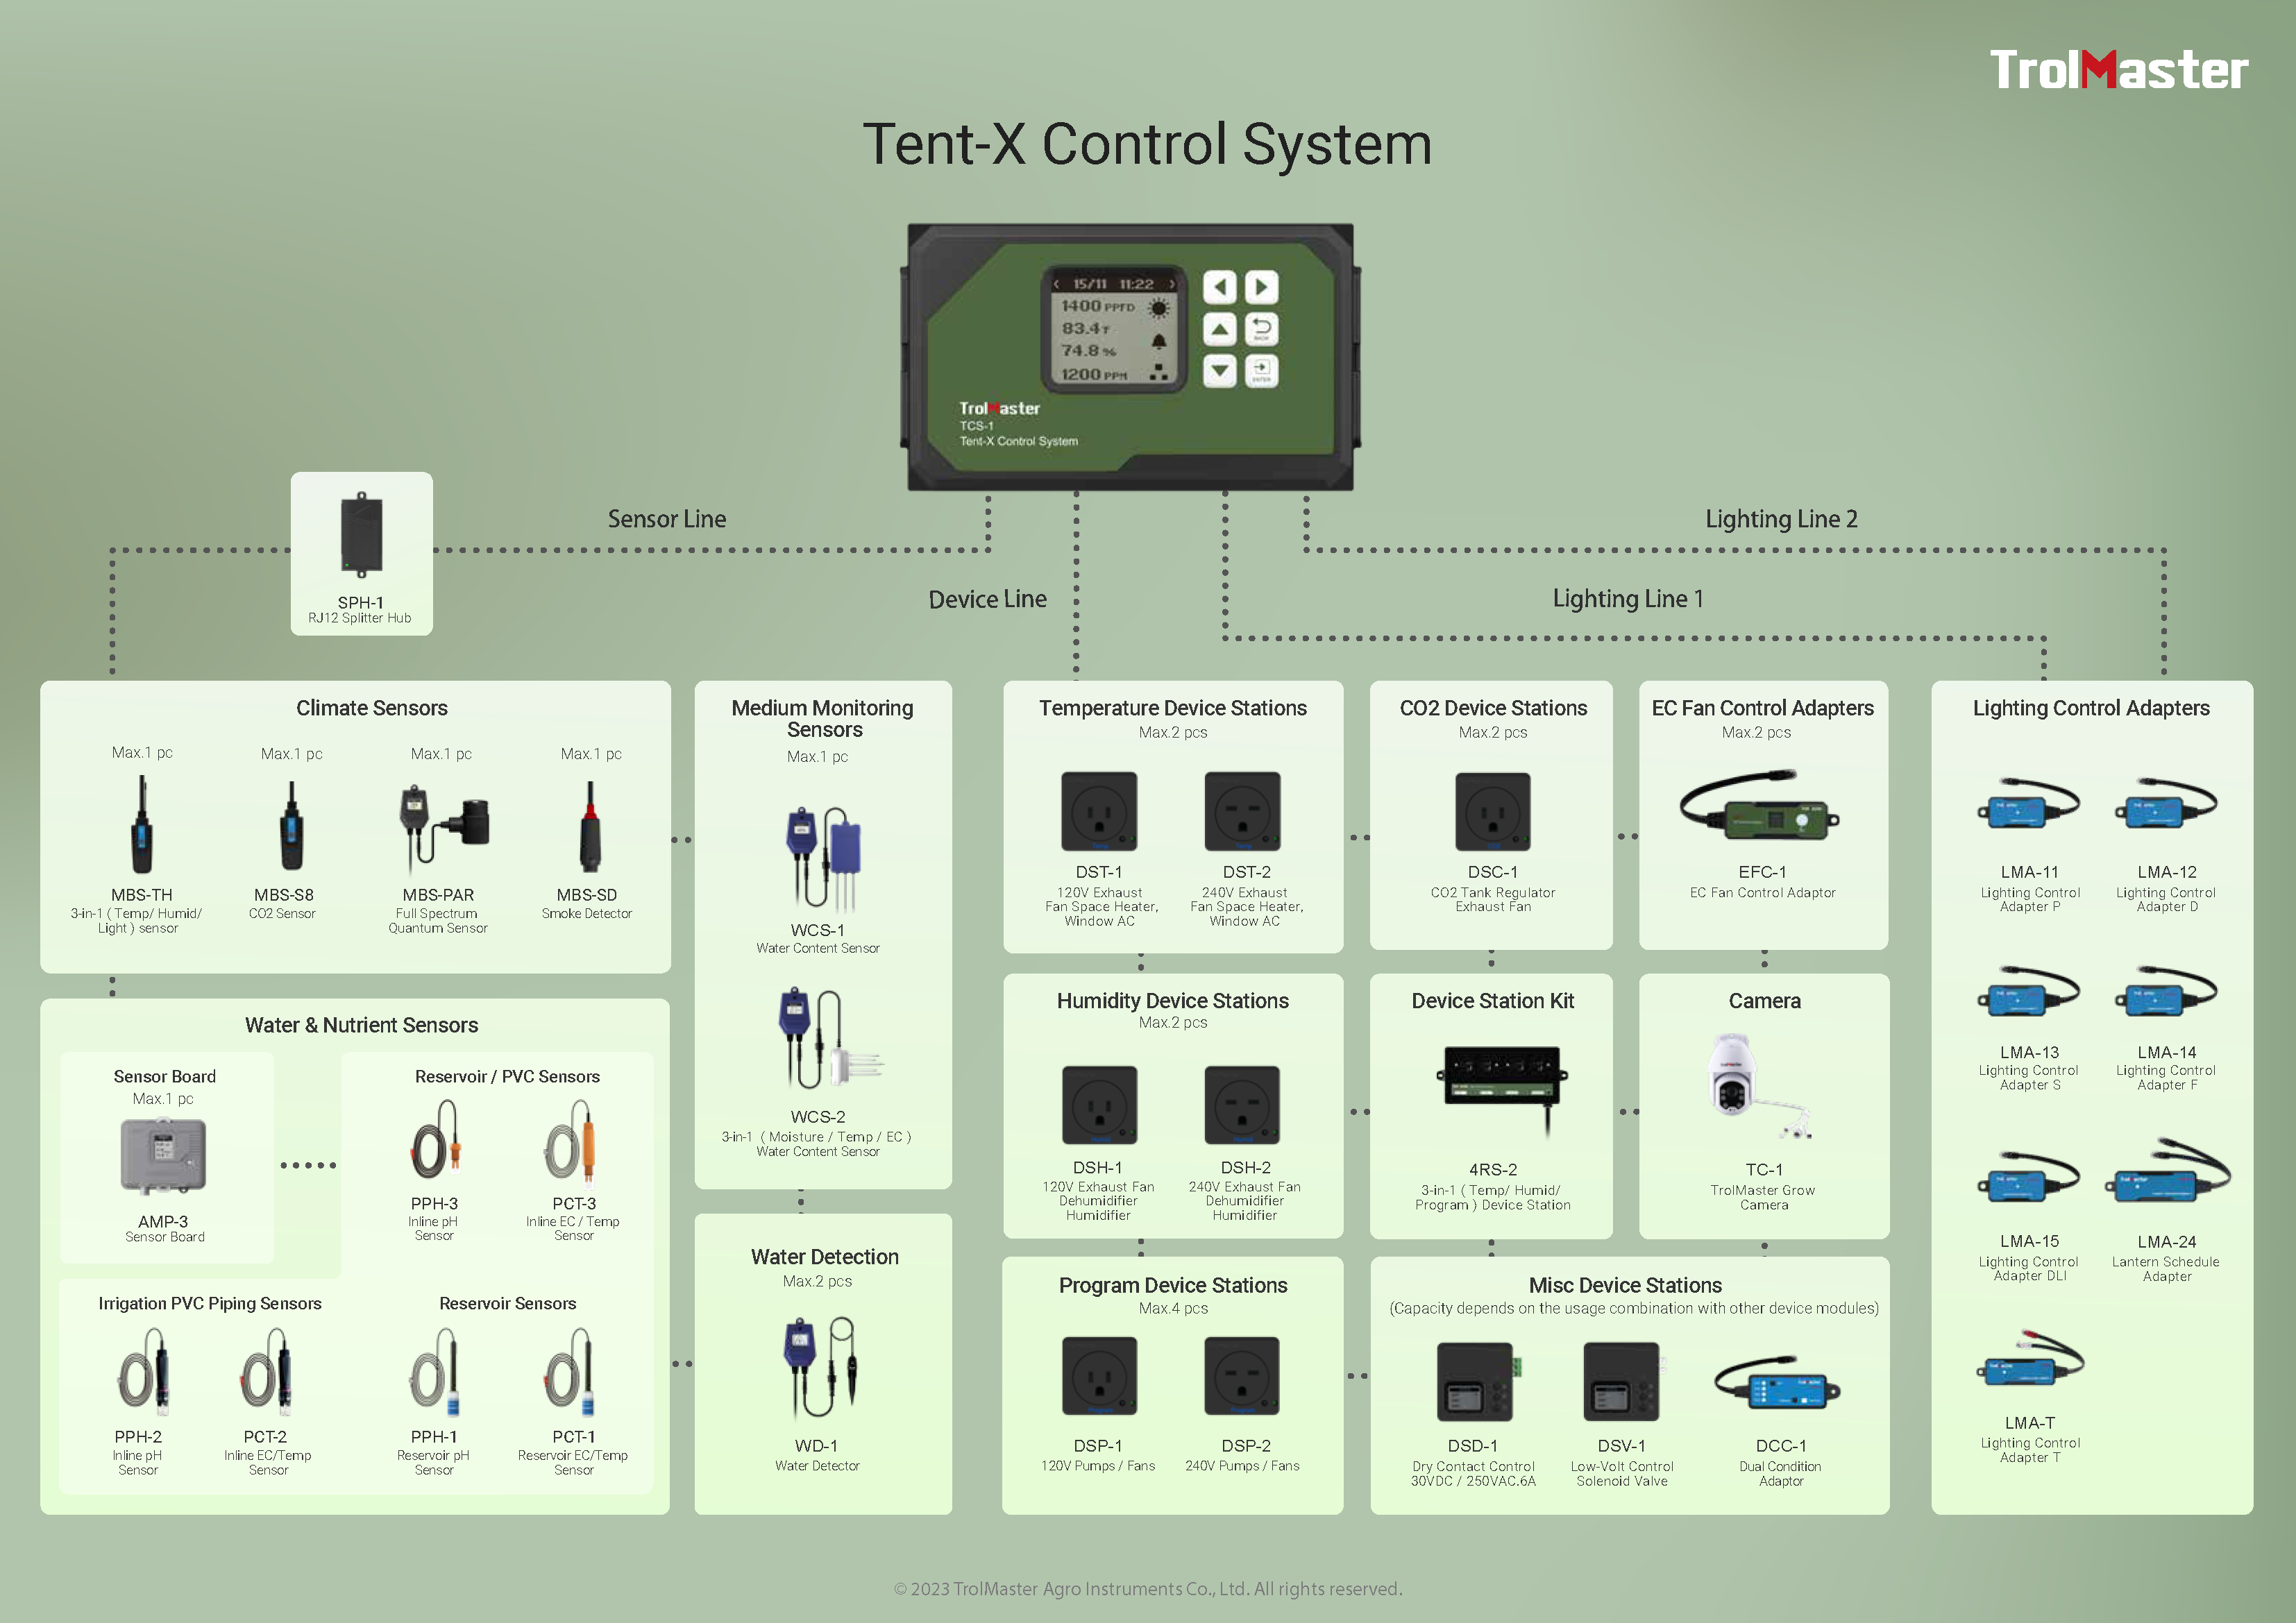 TrolMaster - Tent-X System Main Controller (TCS-1)